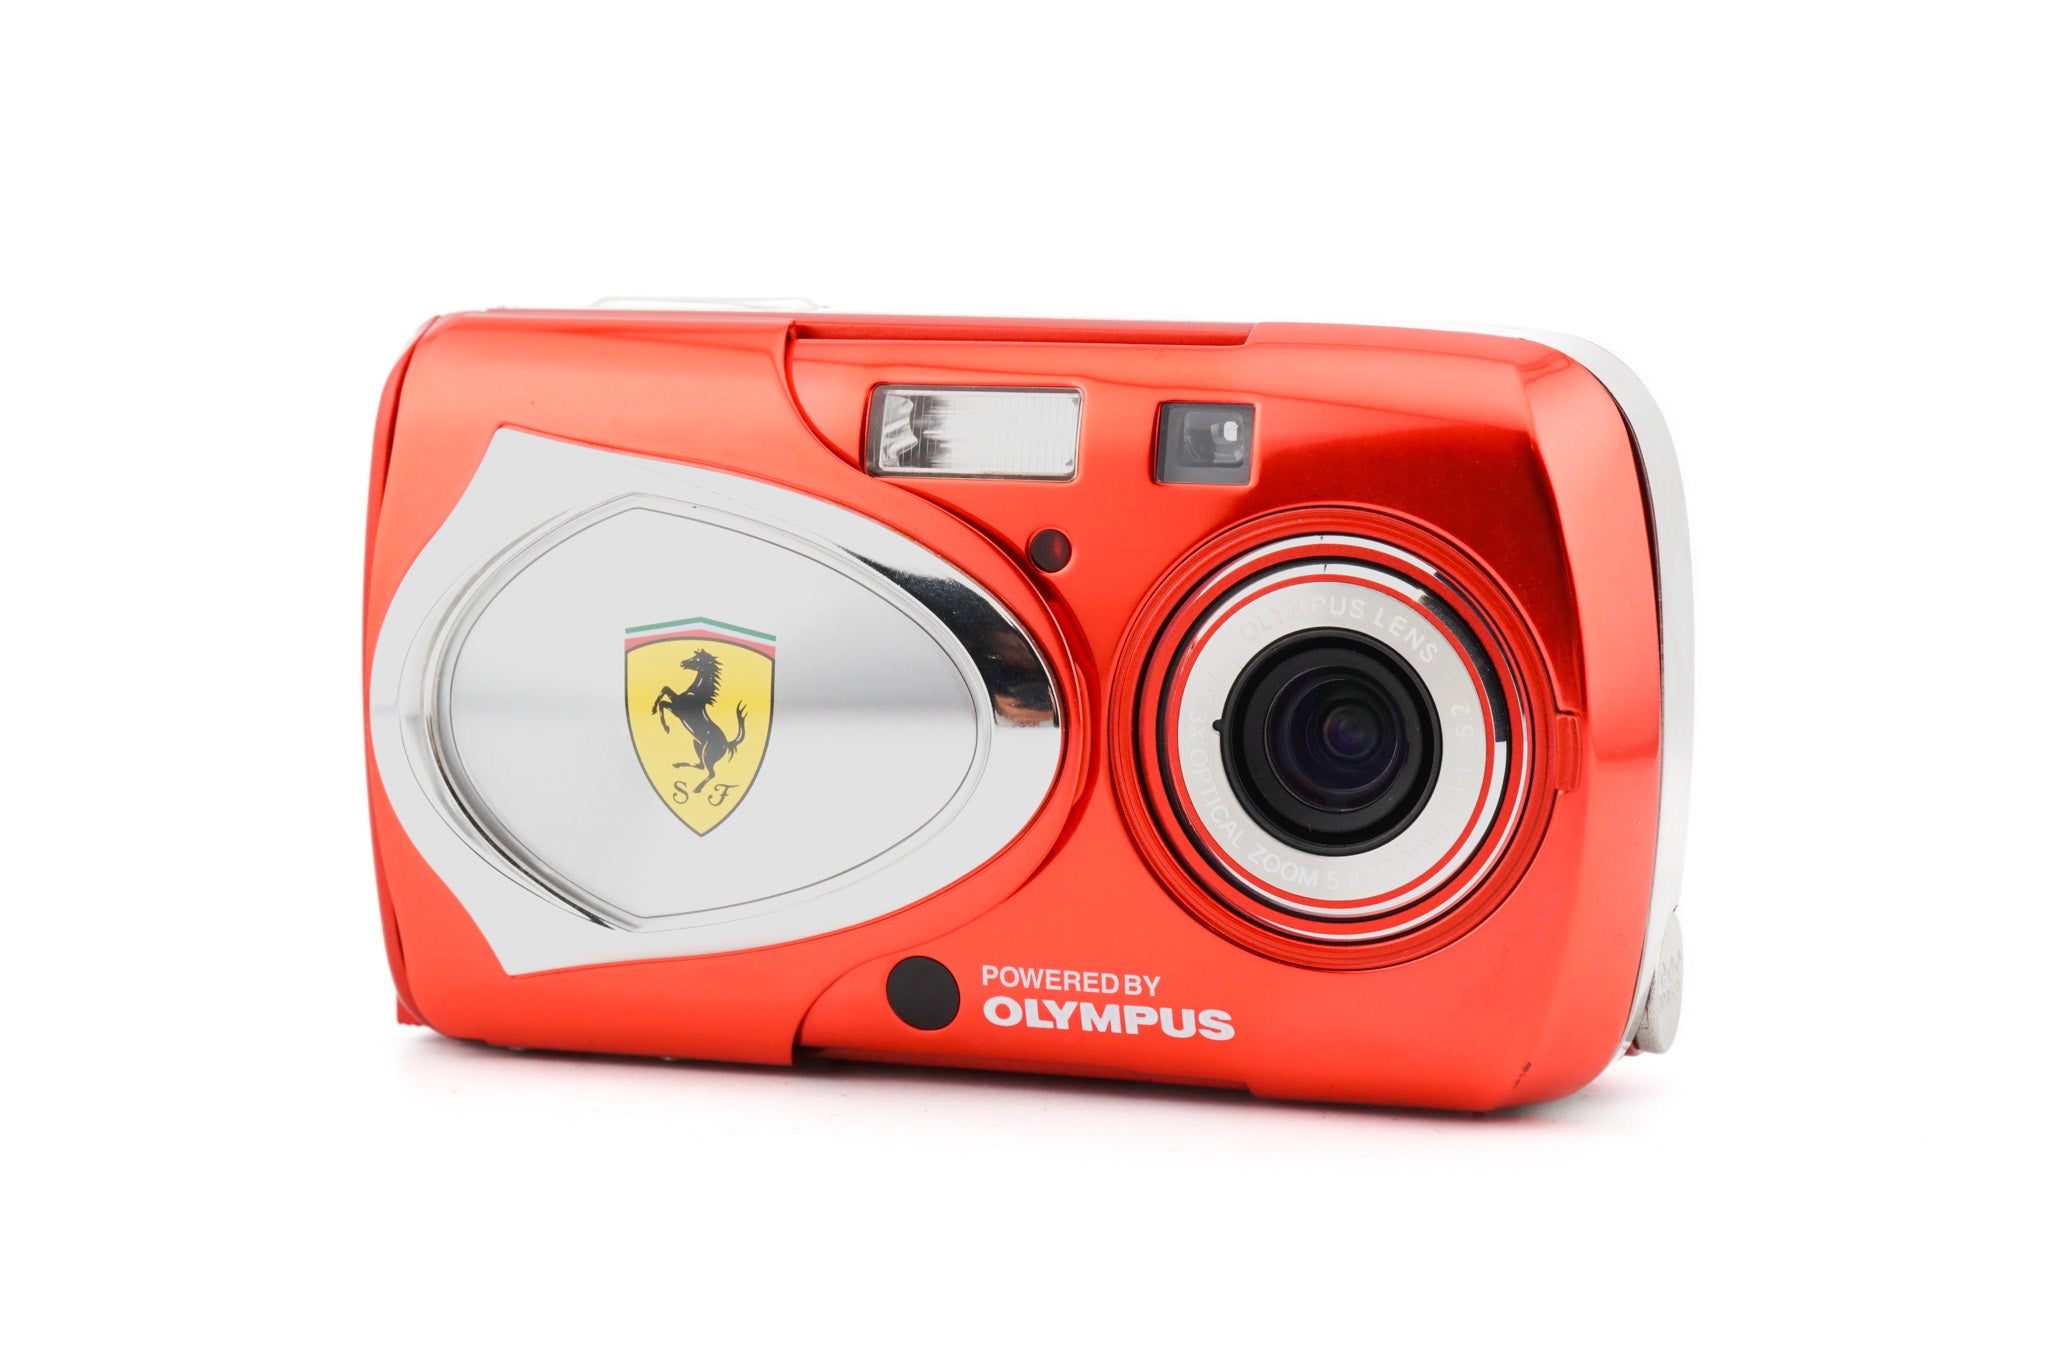 Olympus Ferrari DIGITAL MODEL 2003